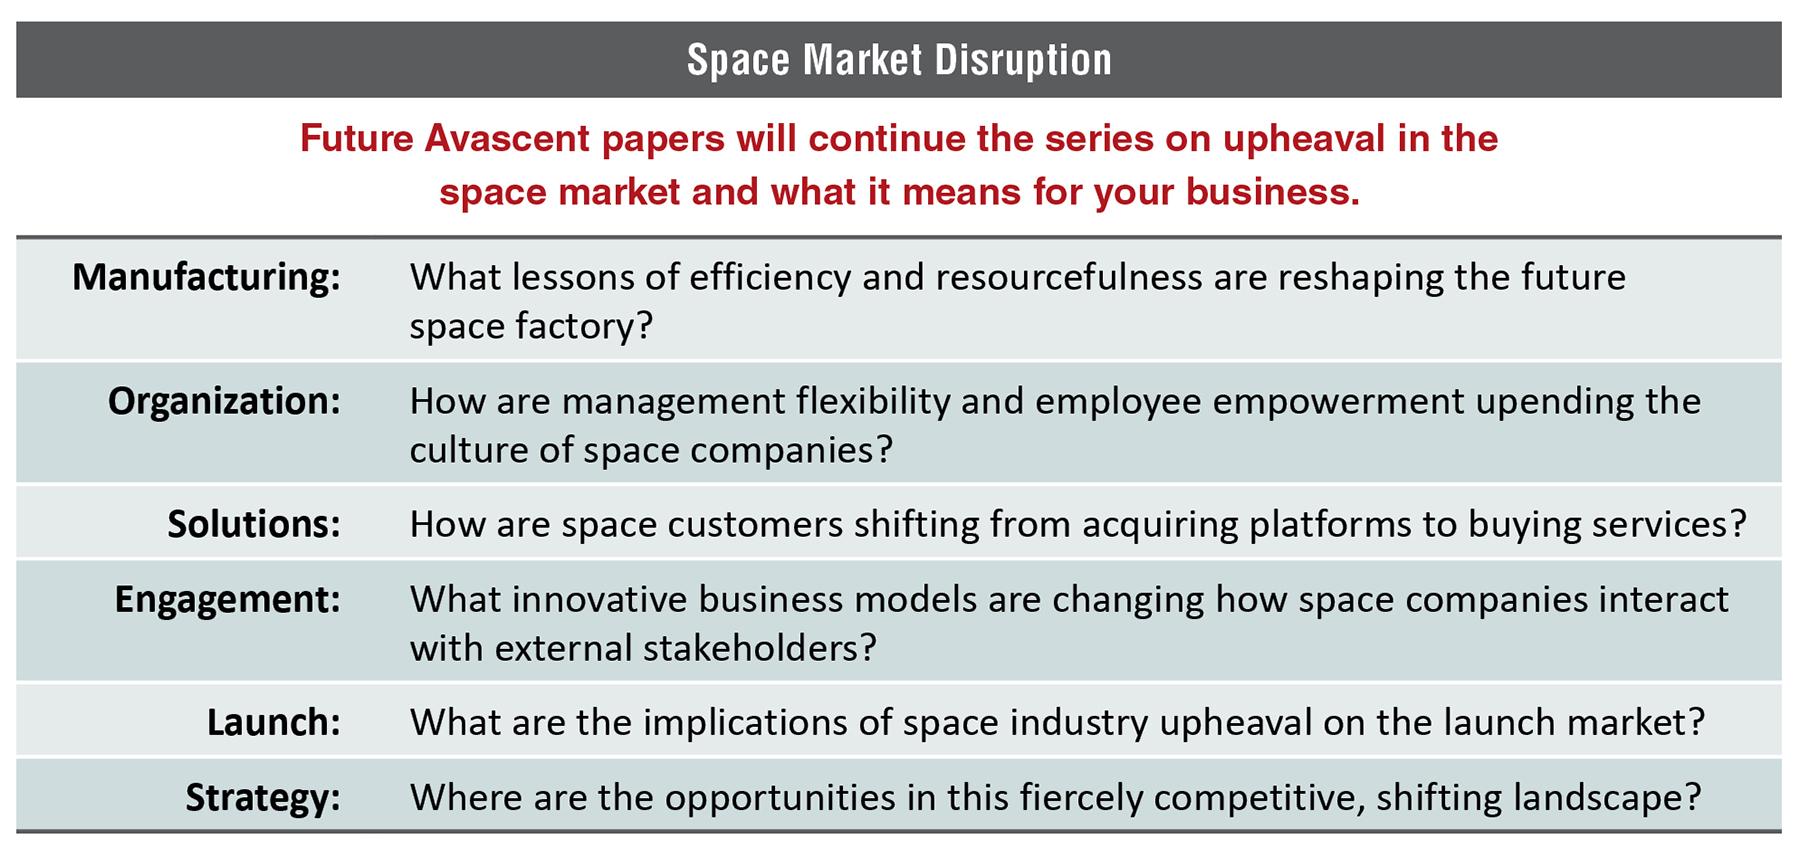 Space Market Disruption Paper Topics